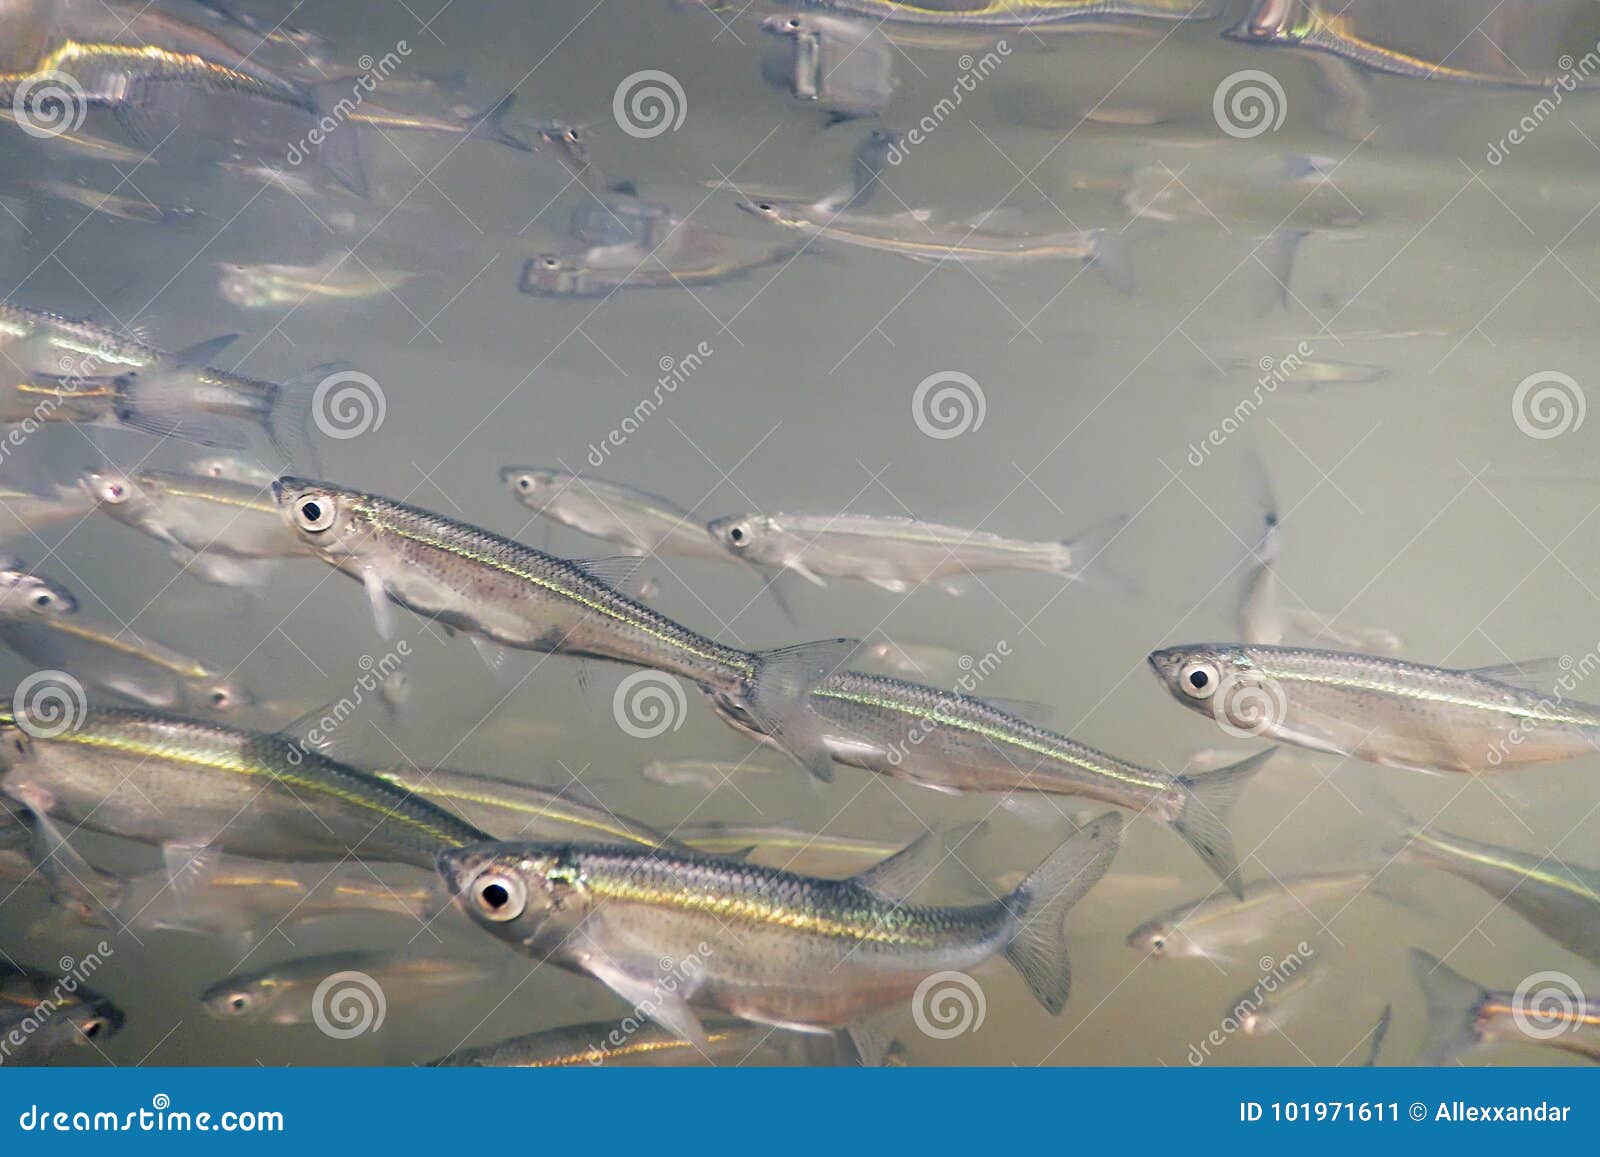 Bait Fish Freshwater Underwater. Common Bleak Close Up Stock Image - Image  of close, river: 101971611